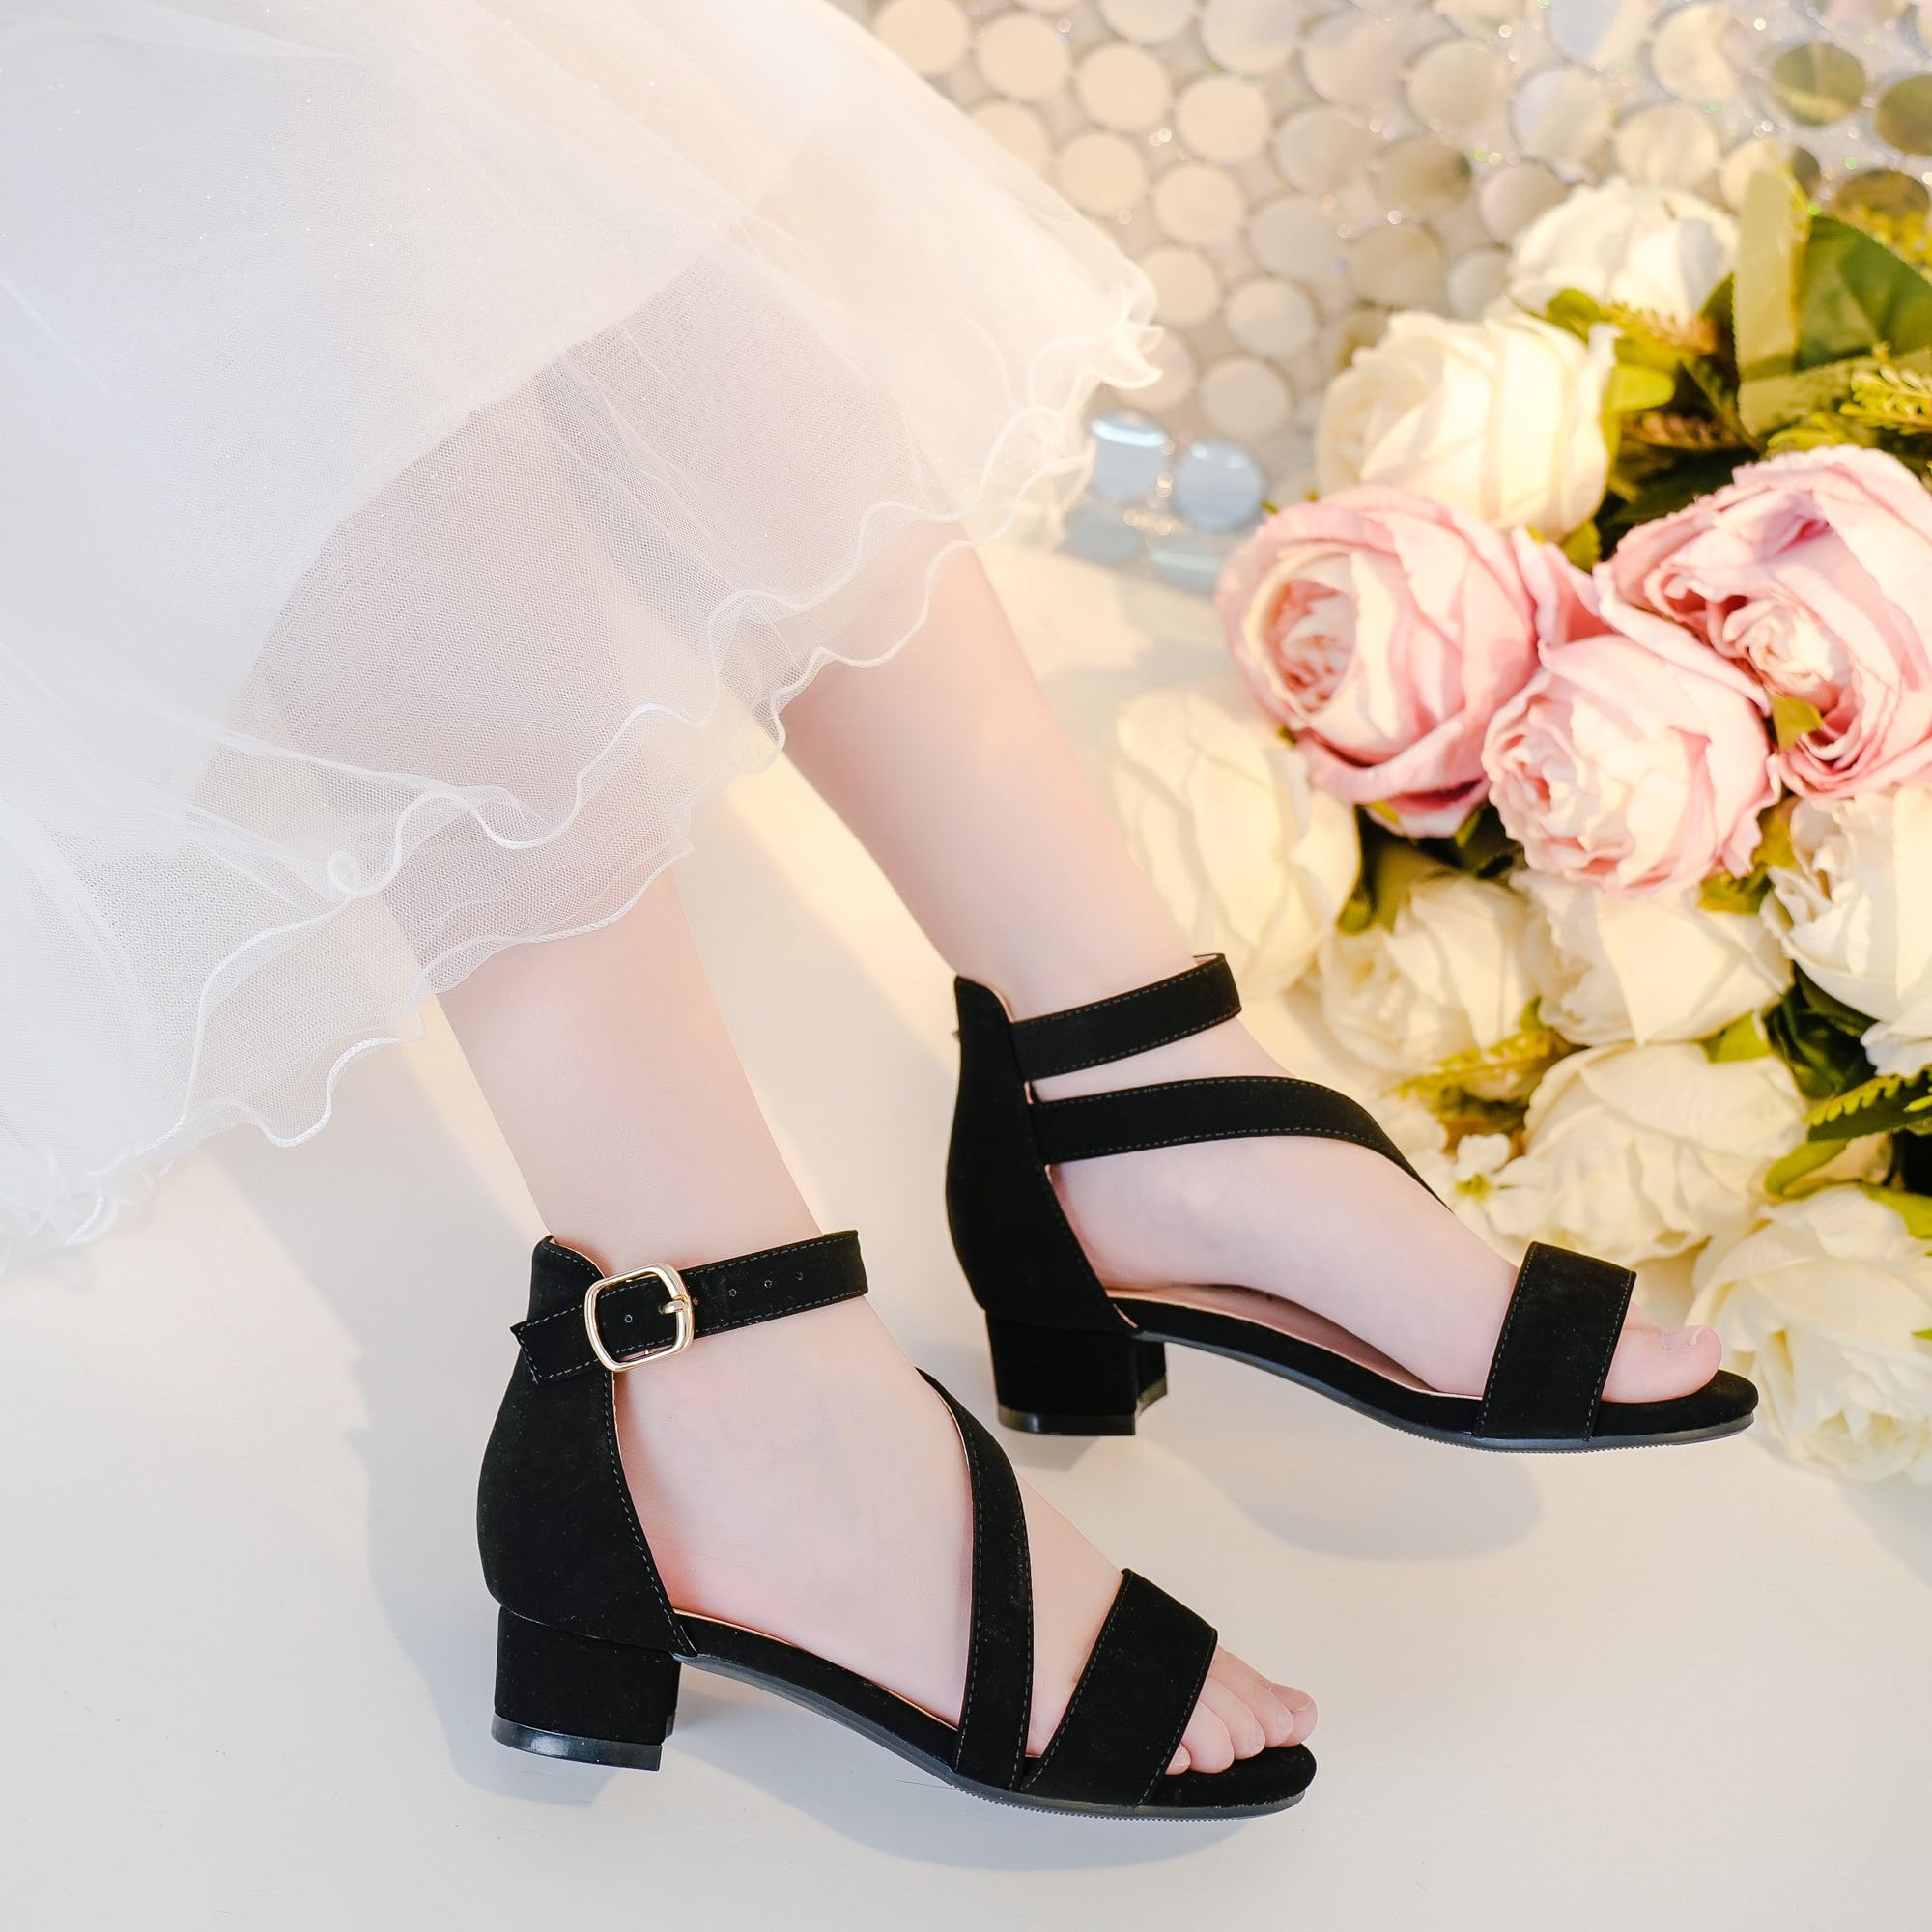 LAURMOSA Girls Sandals Kids Heels Open Toe Ankle Strap Dress Shoes Flower Wedding Party for Toddler Little Big Kid